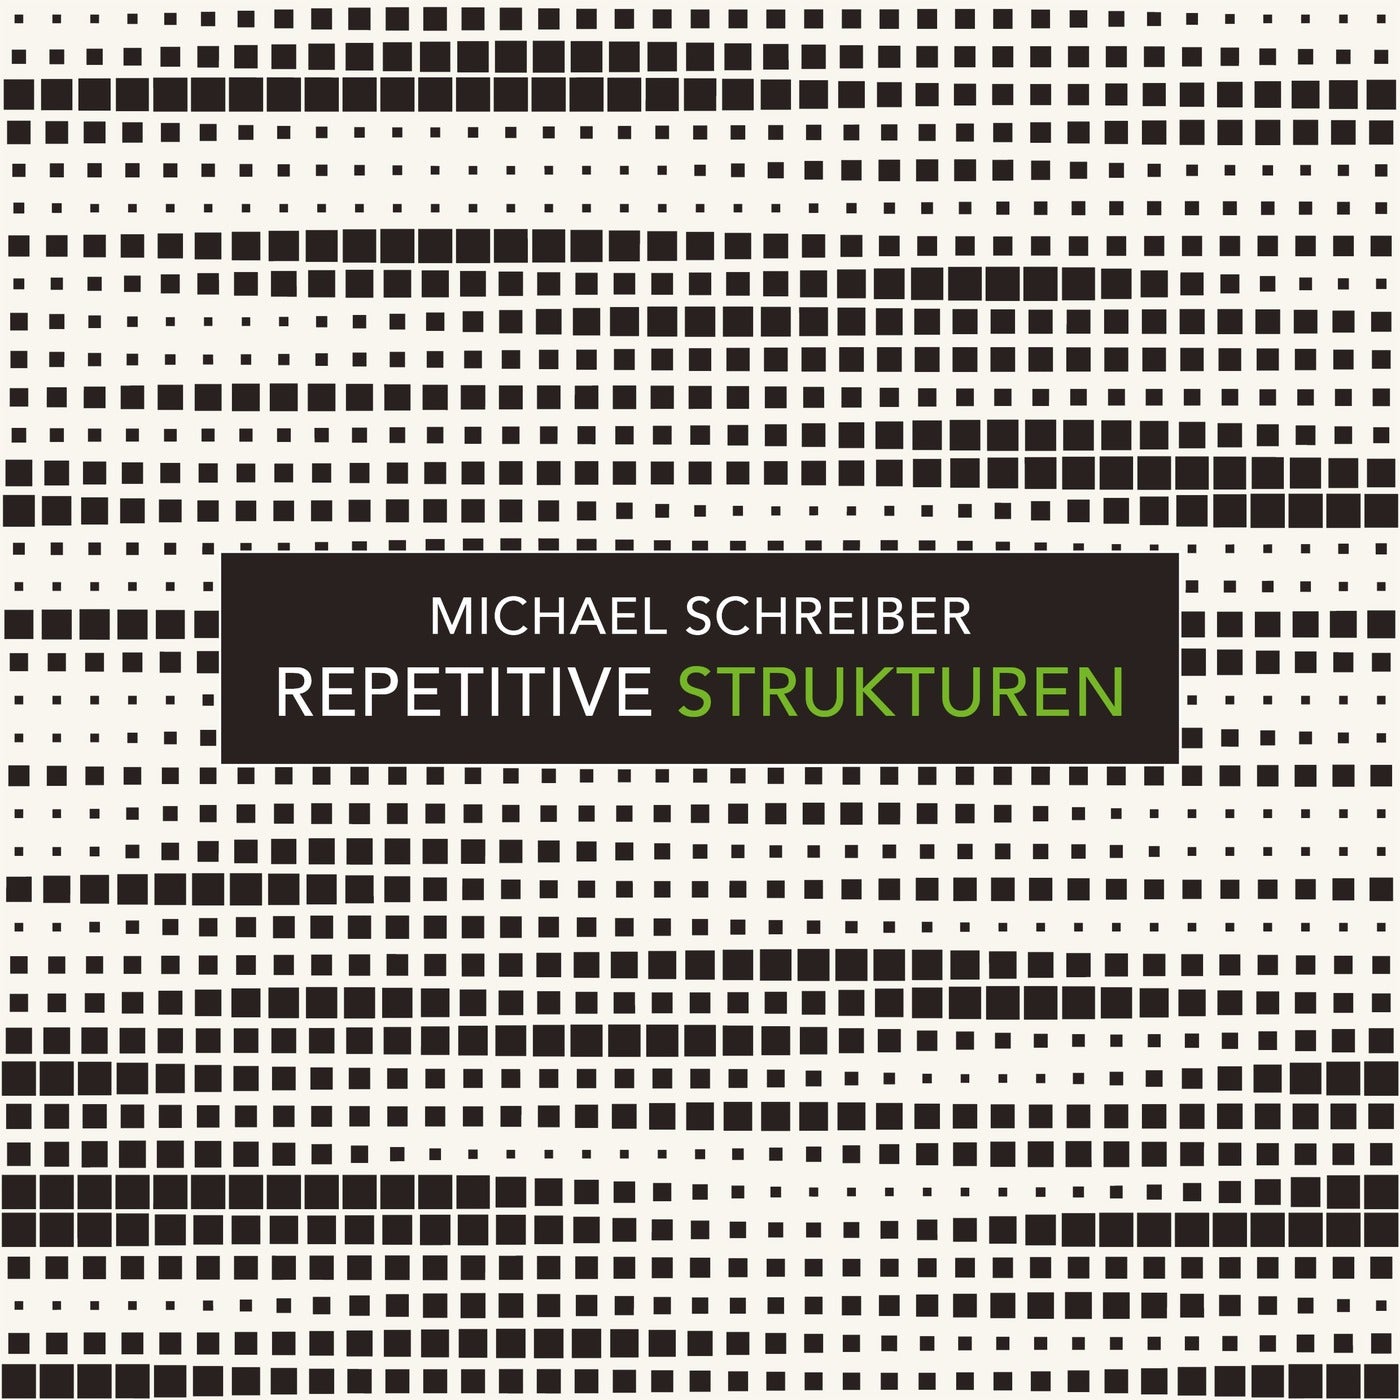 Repetitive Strukturen